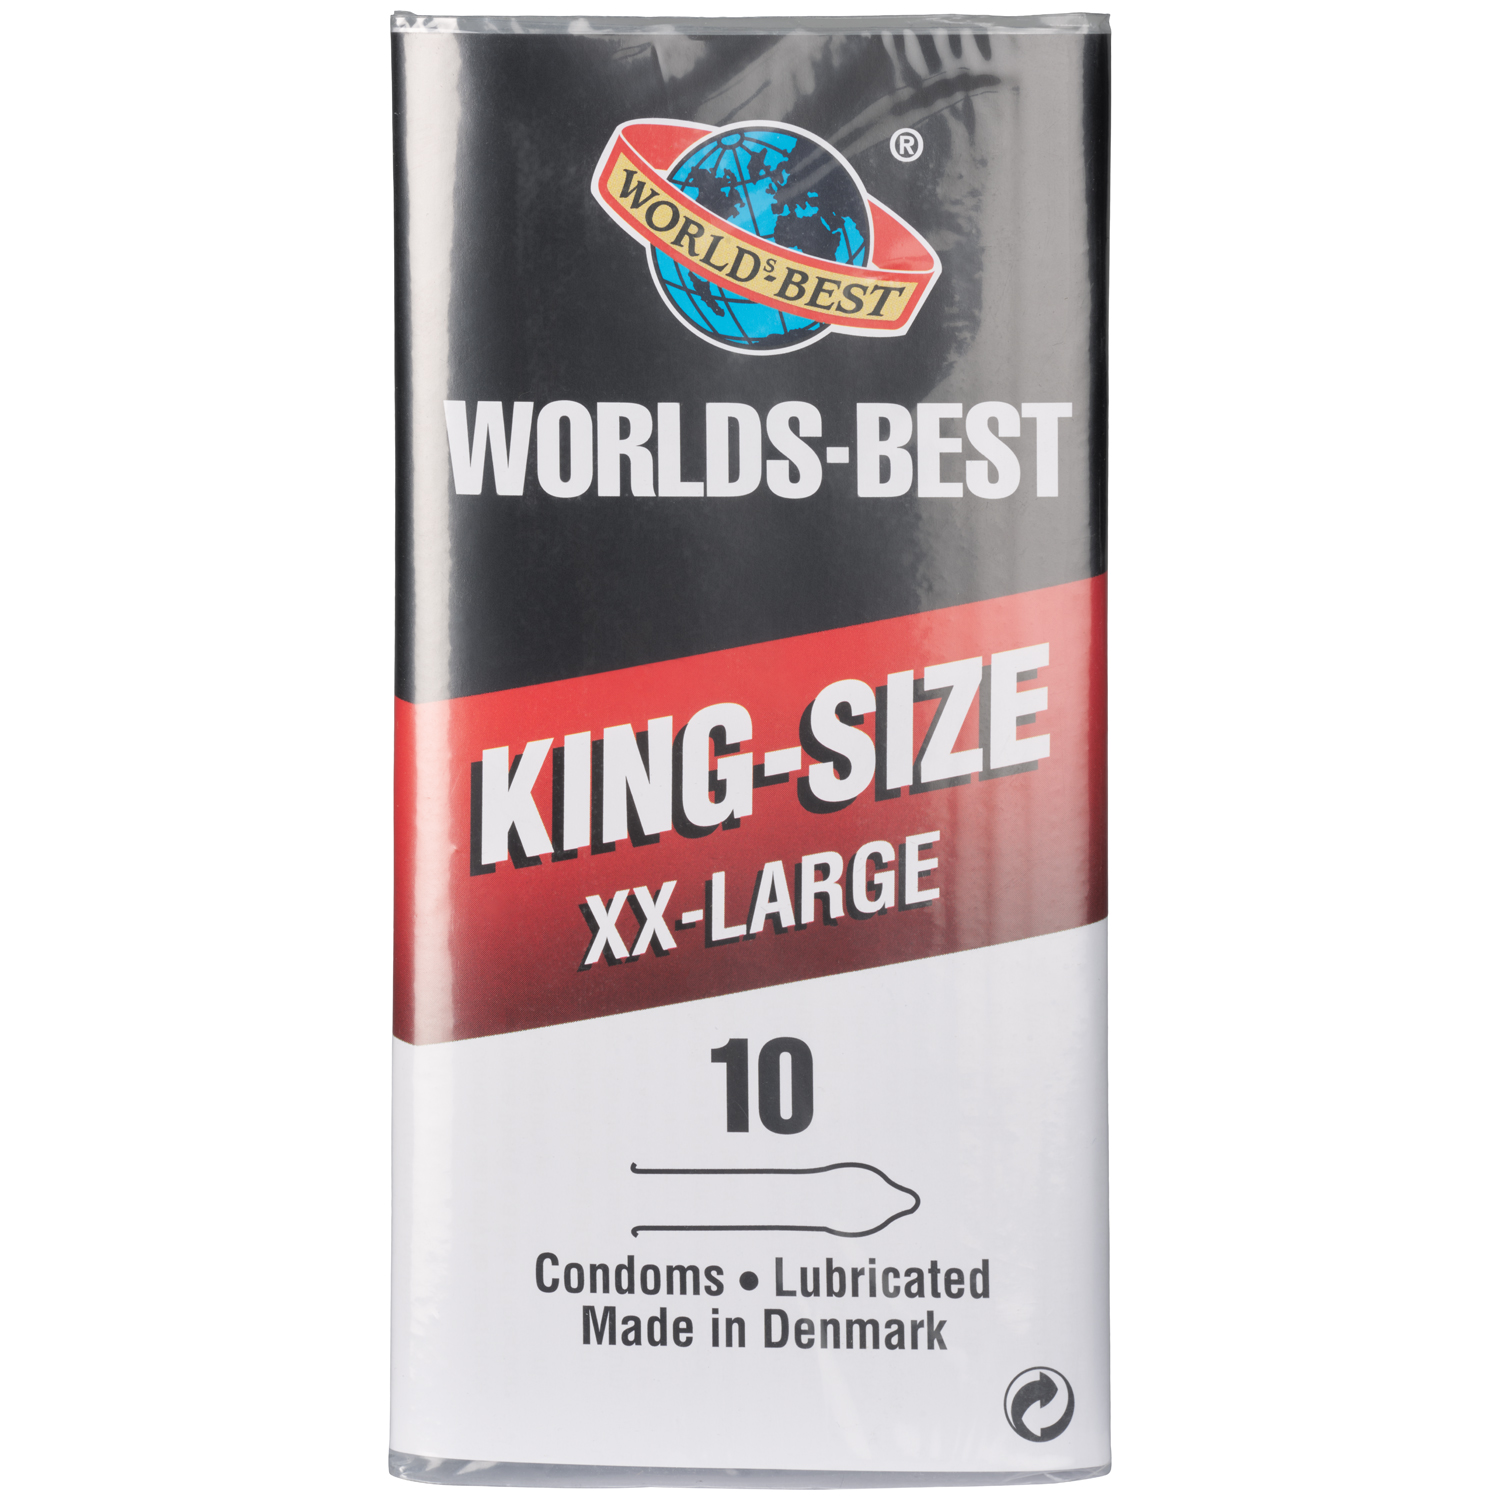 Worlds-best King-Size XXL Kondomer 10 stk     - Klar - 2XL thumbnail